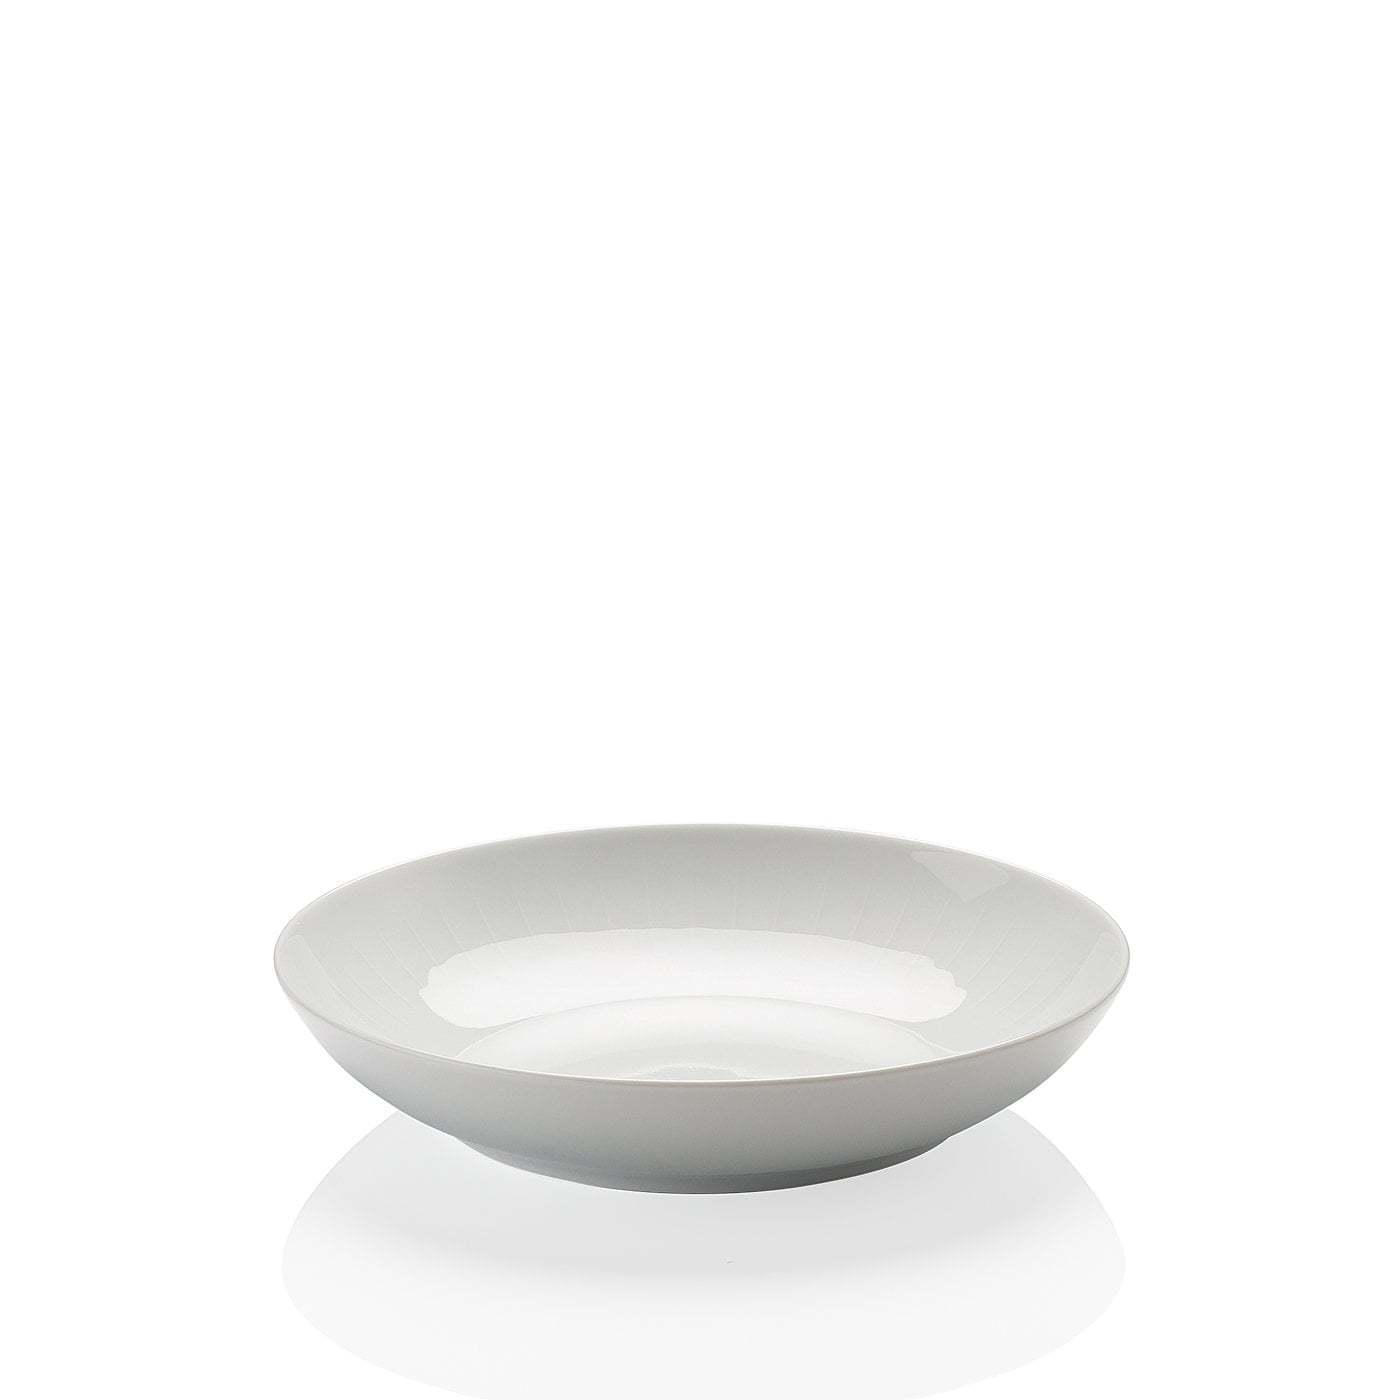 DUBOKI TANJIR  23 cm        - bela, Osnovno, keramika (23cm) - Rosenthal